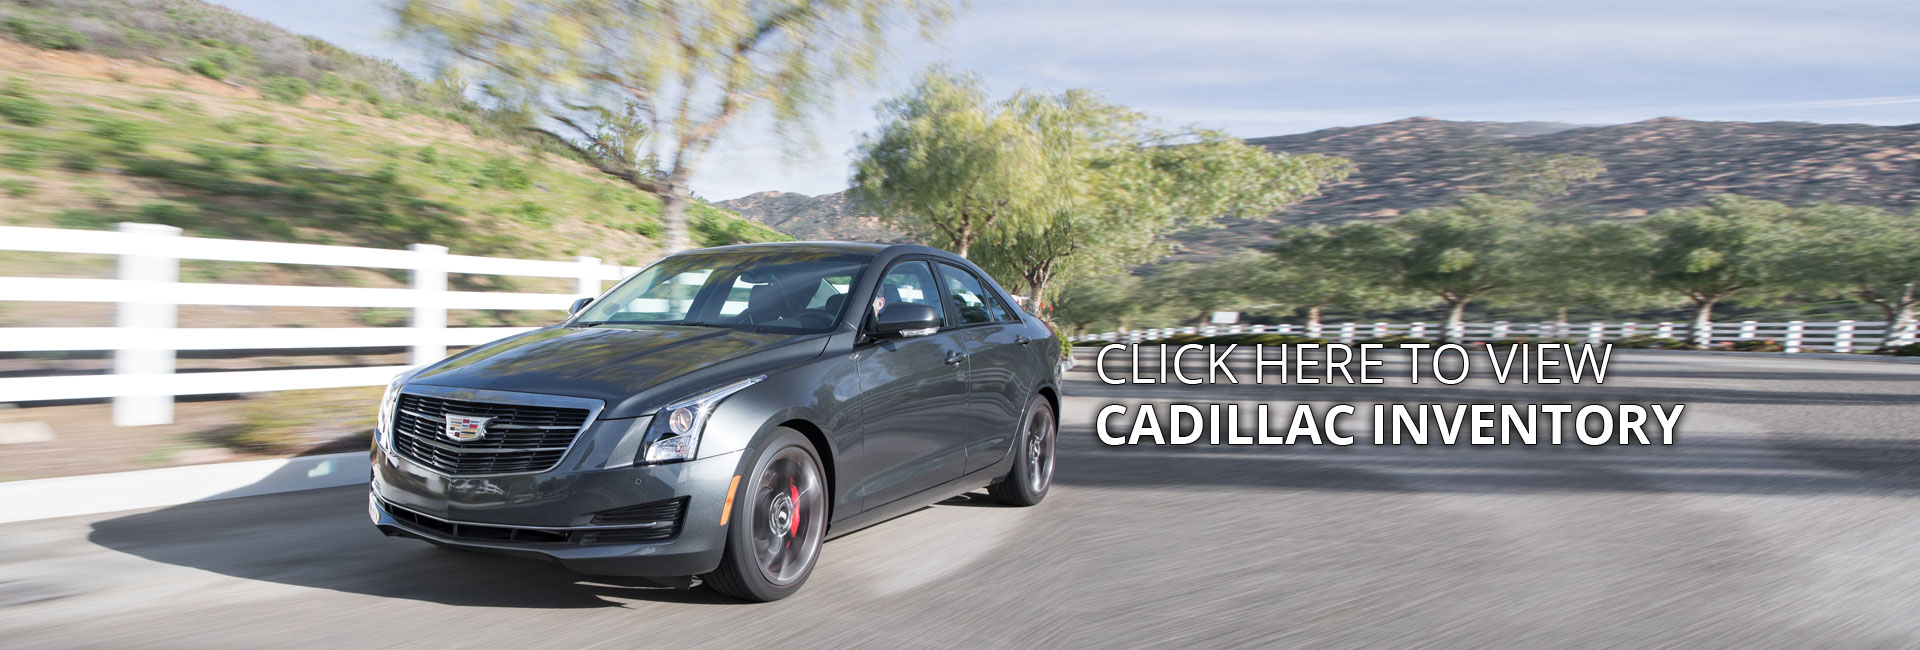 Choice Auto - Cadillac